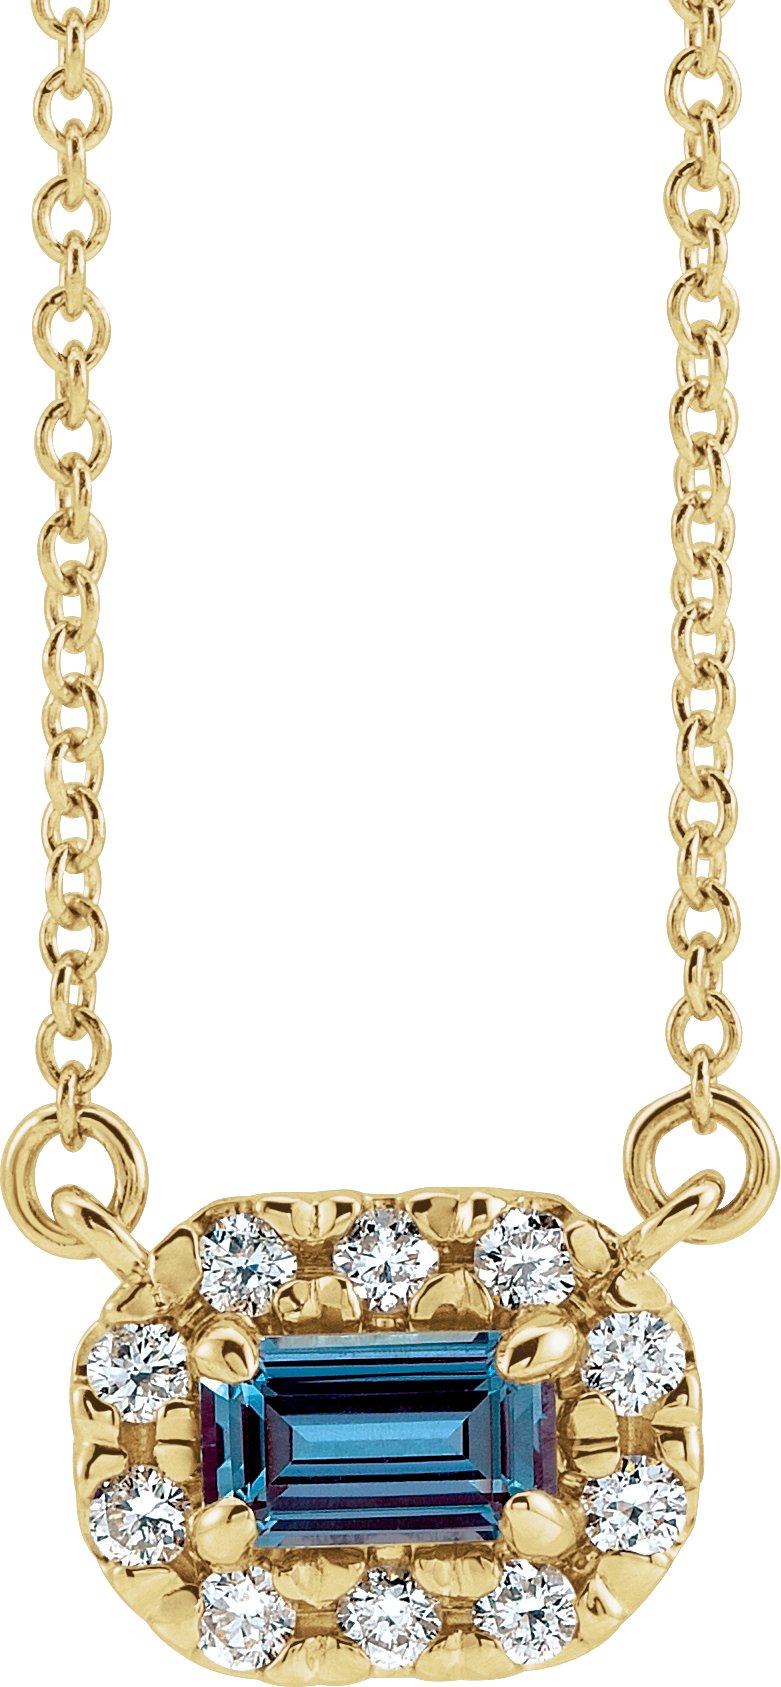 14K Yellow 5x3 mm Emerald Chatham® Lab-Created Alexandrite & 1/8 CTW Diamond 18" Necklace